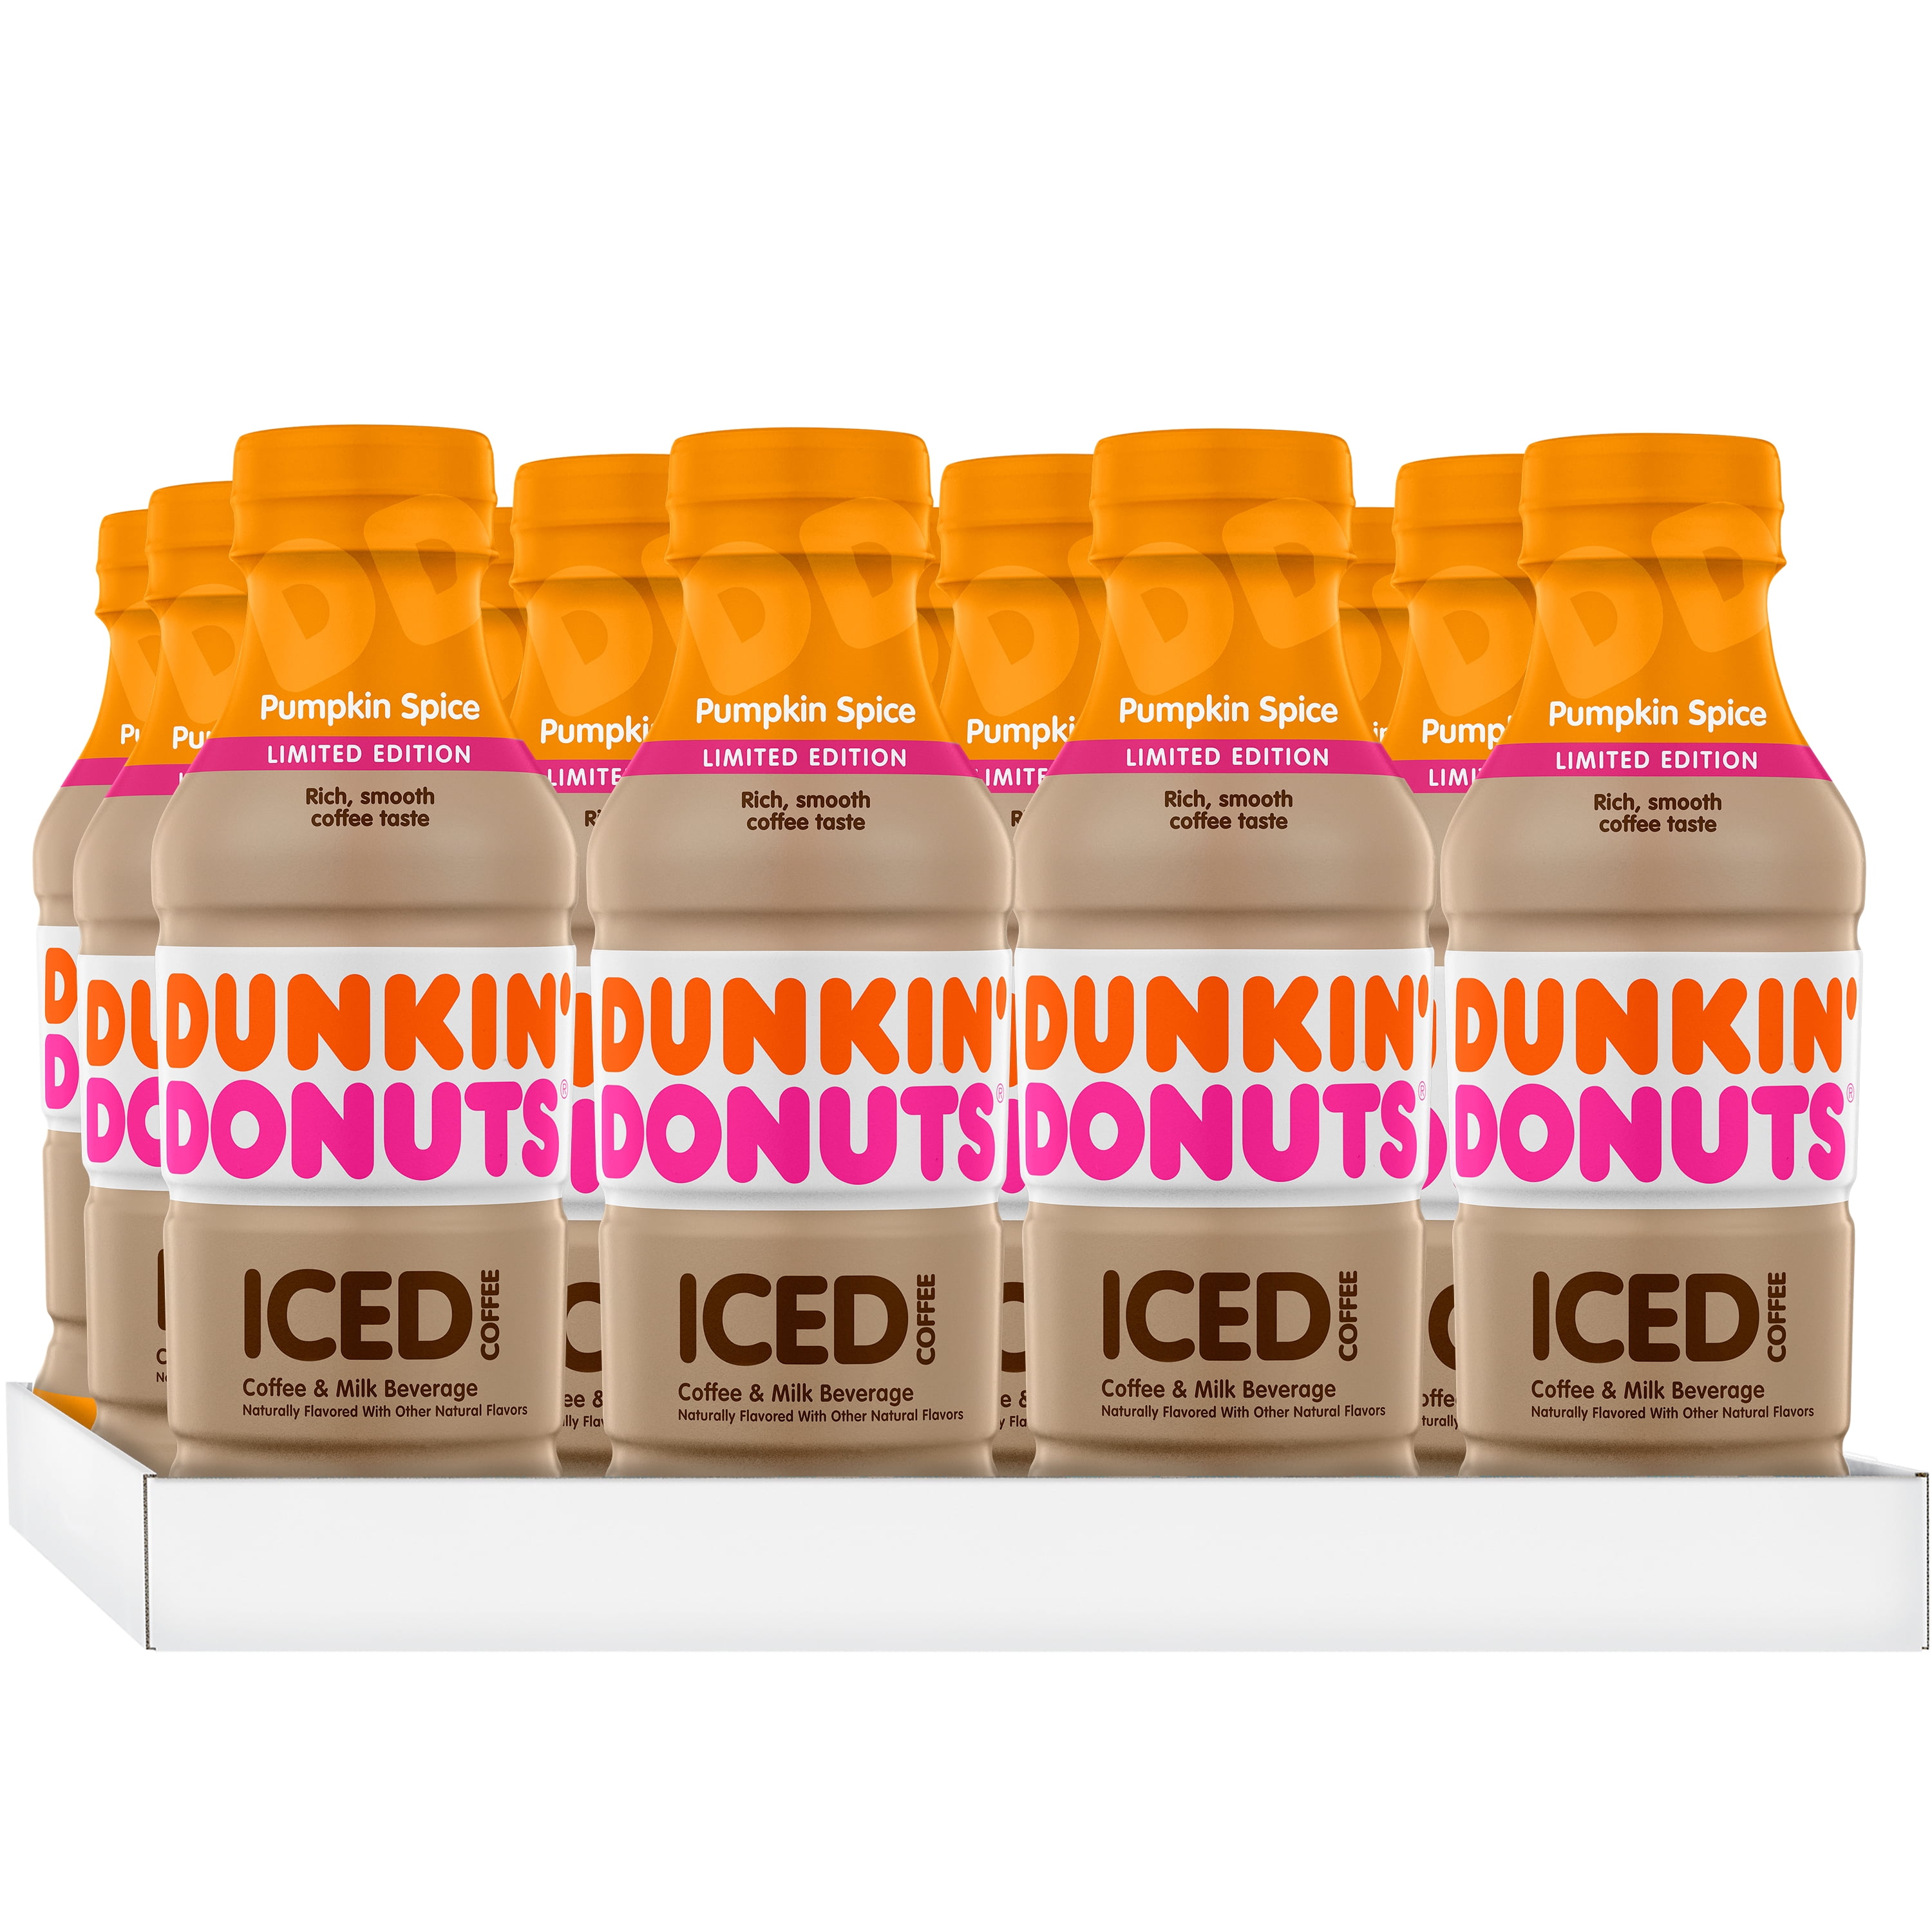 Dunkin' Donuts Pumpkin Spice Iced Coffee Bottles, 13.7 fl oz (12pack